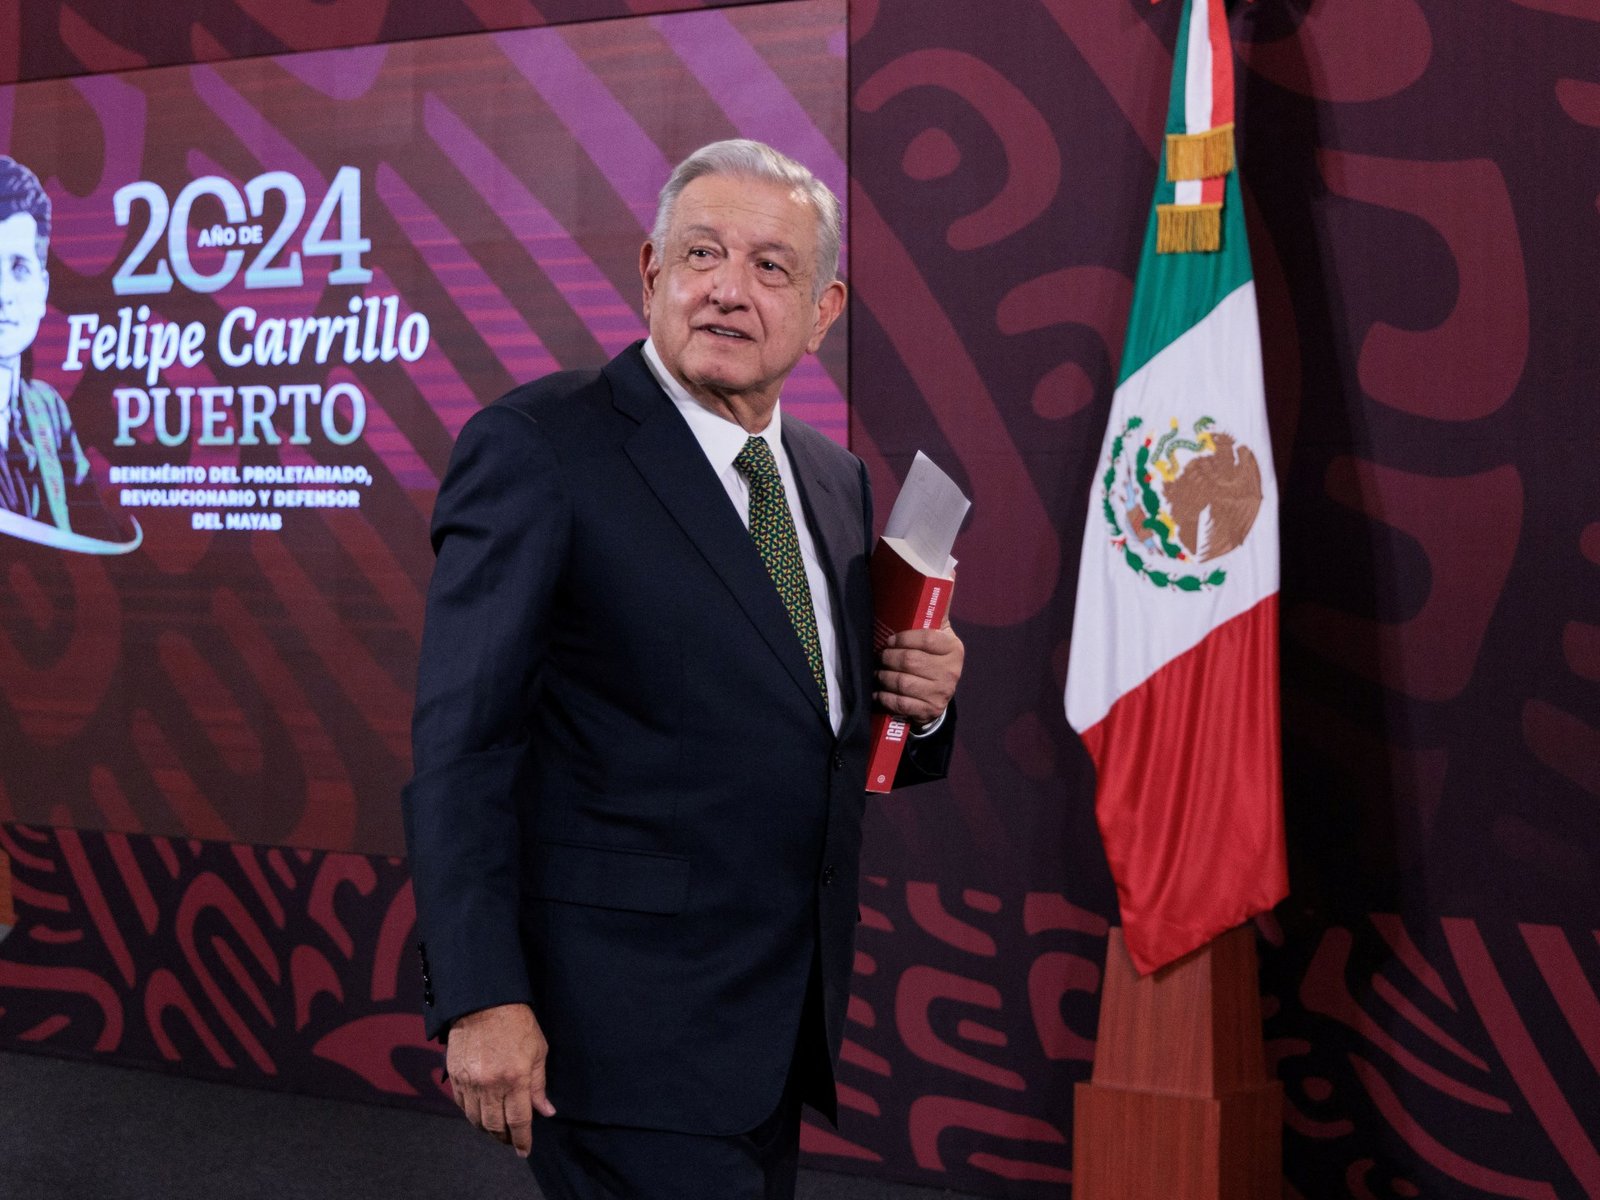 Amid diplomatic spat, Mexico grants former Ecuadorian vice president asylum | News